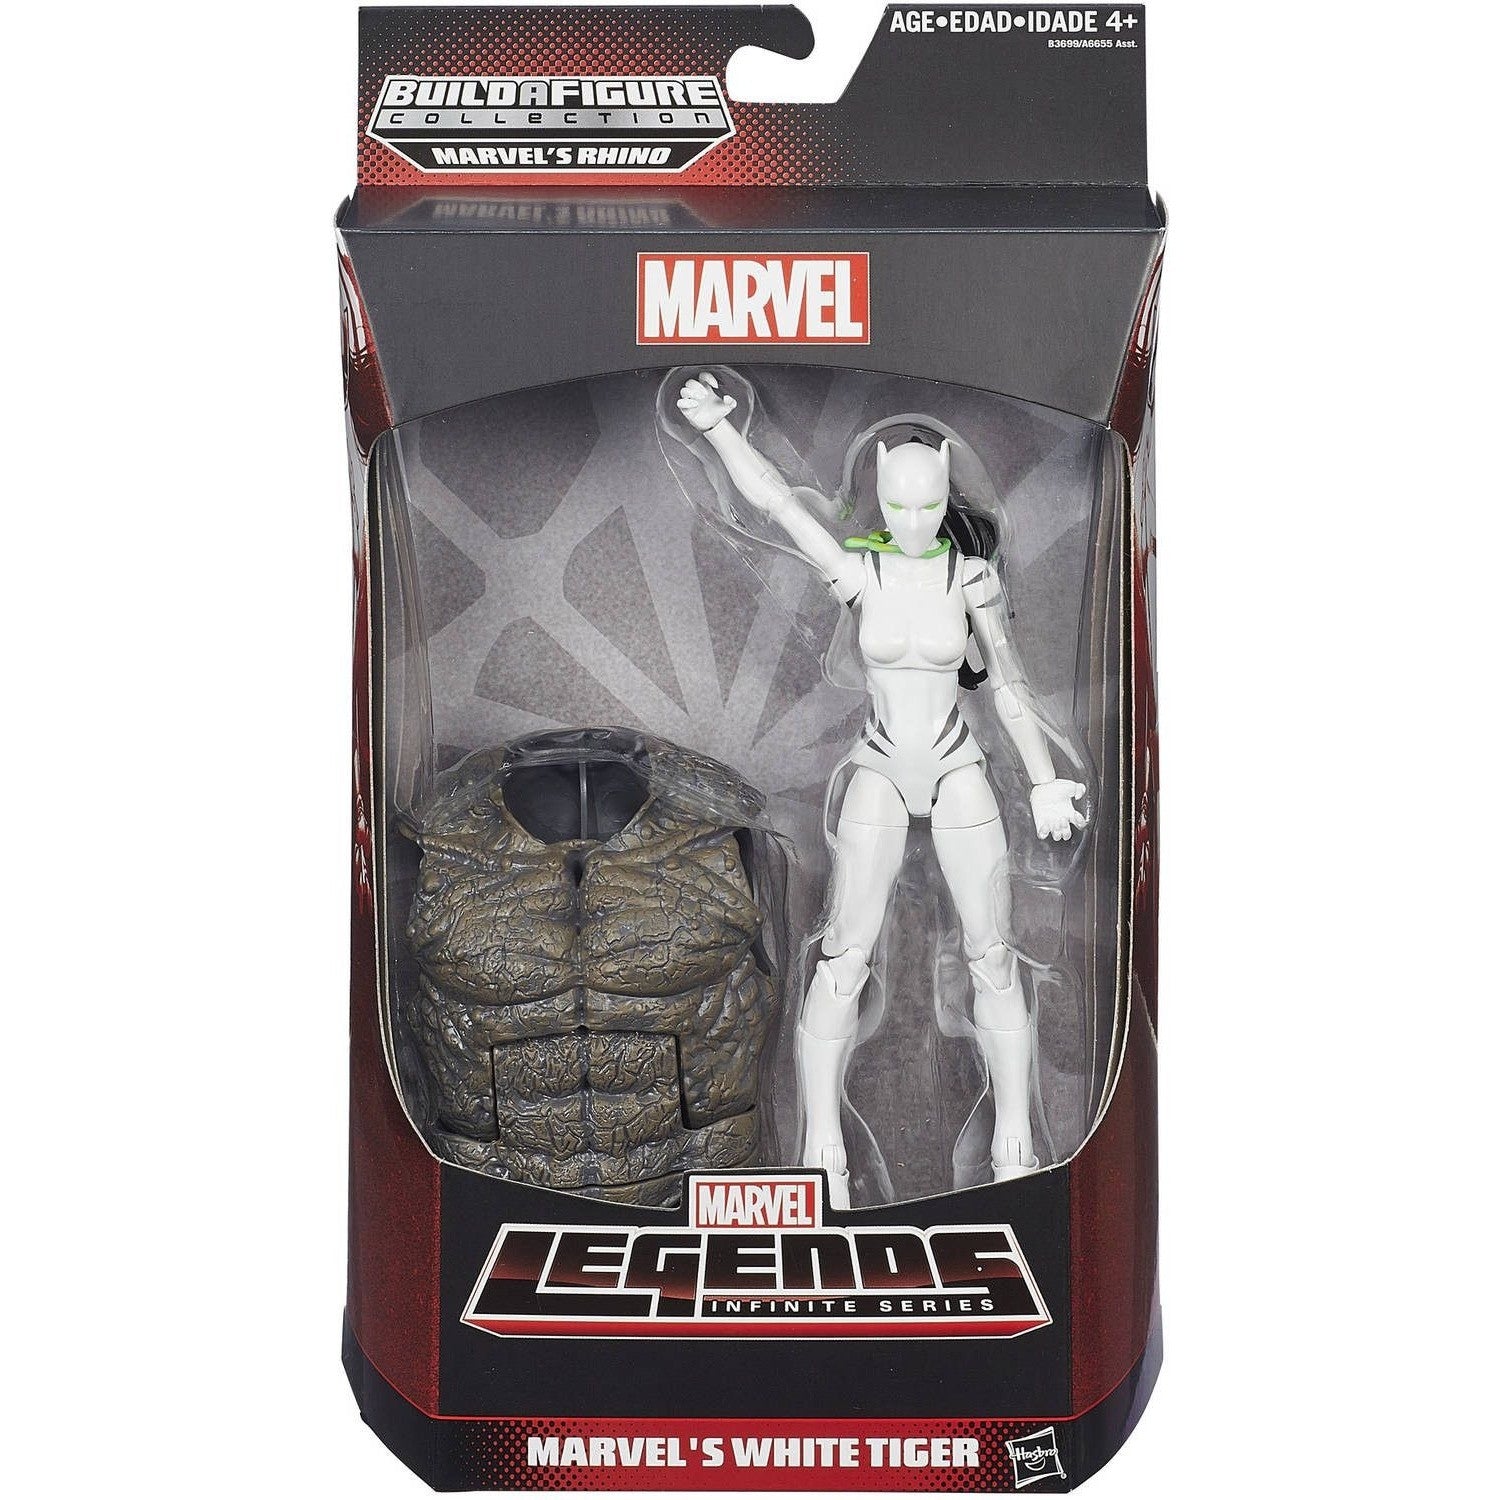  Marvel Legends Infinite Series White Tiger Action Figure Uncanny!